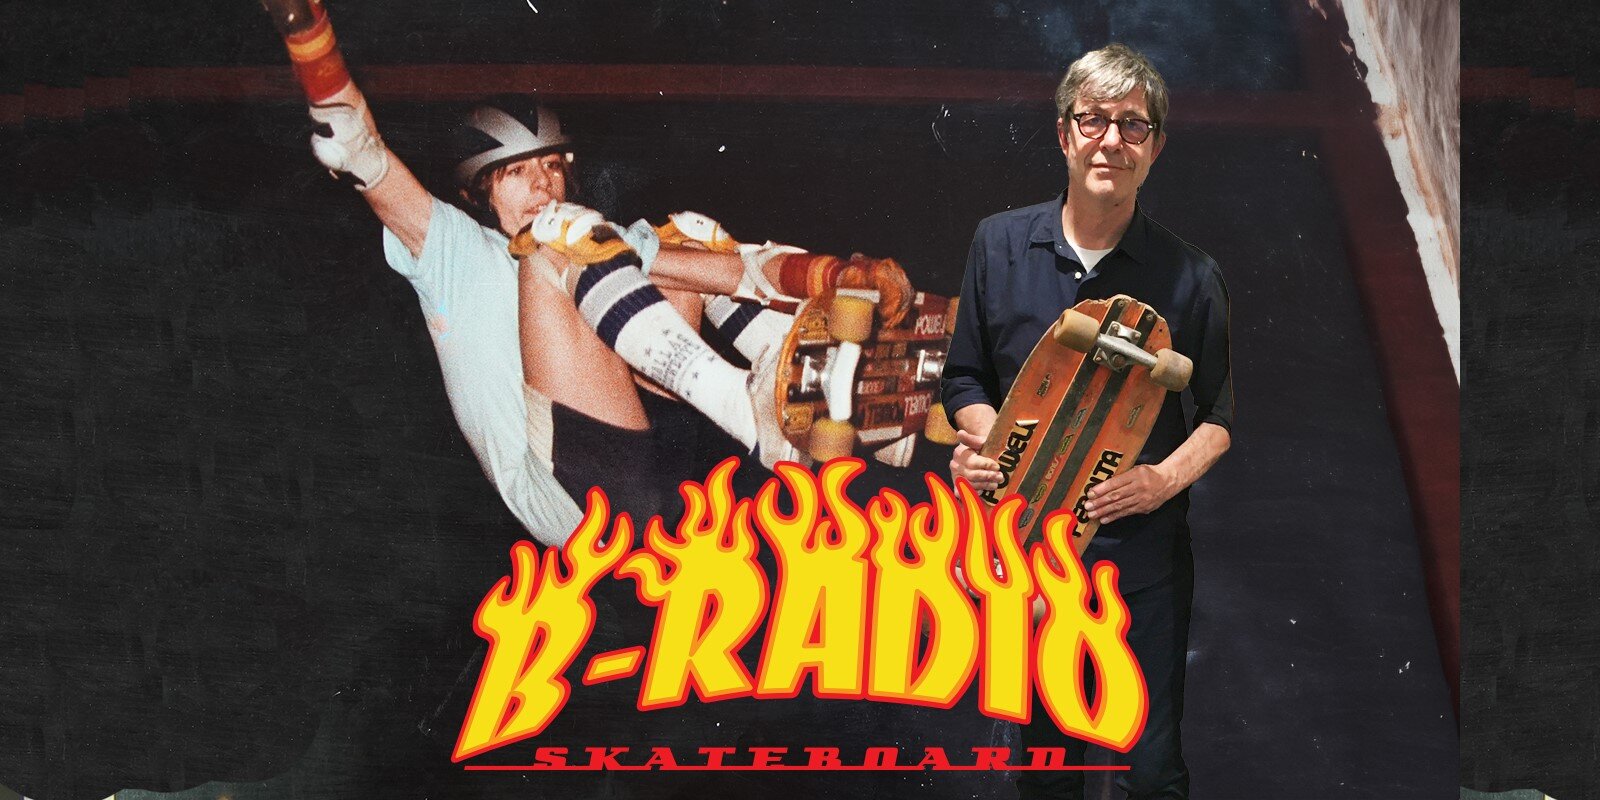 B-Radio - Skateboard